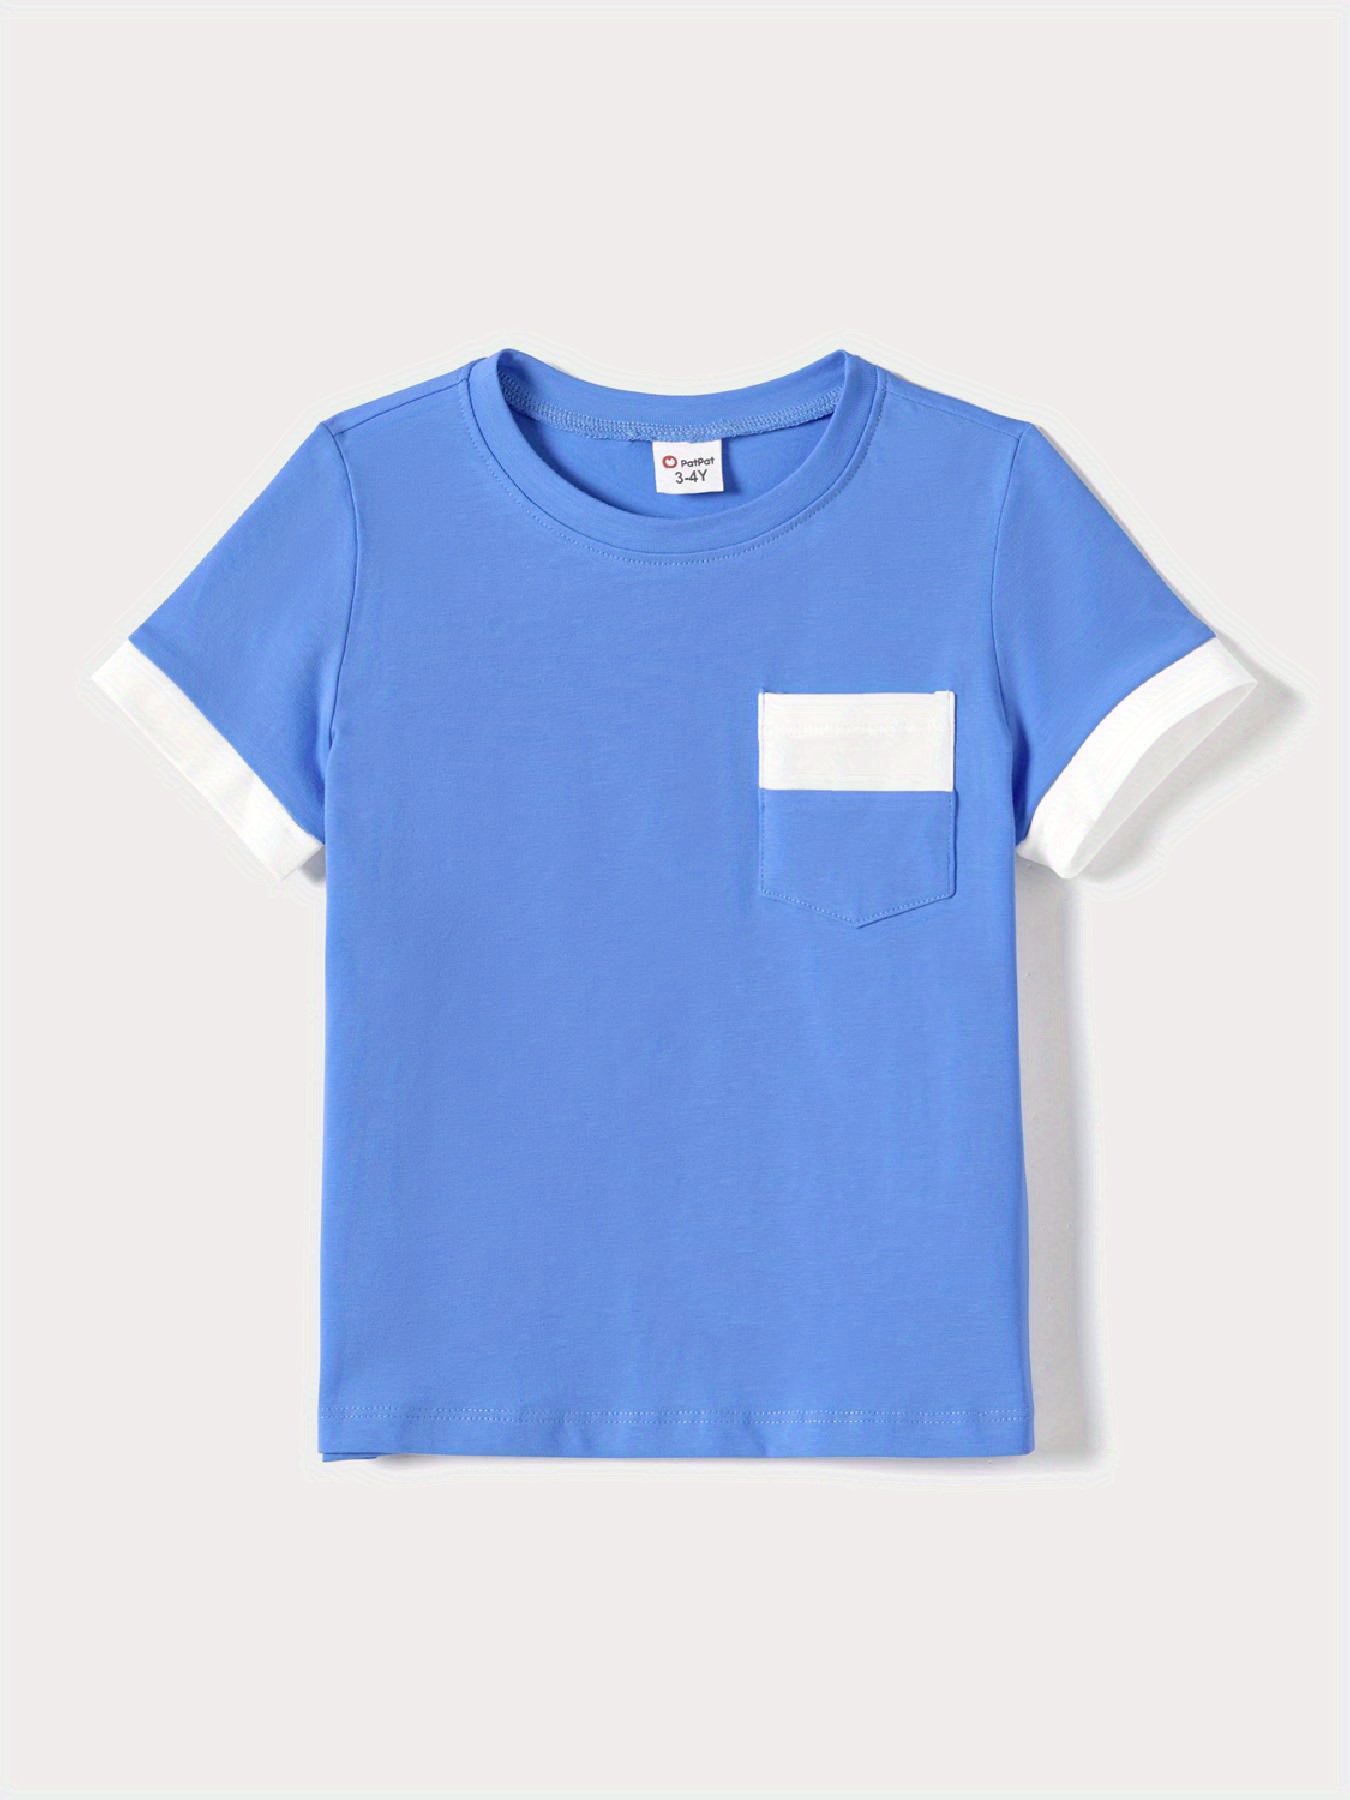 STYLISH PAINT BLUE CYAN WHITE MARINE AQUA BLOCKISM. Kids T-Shirt